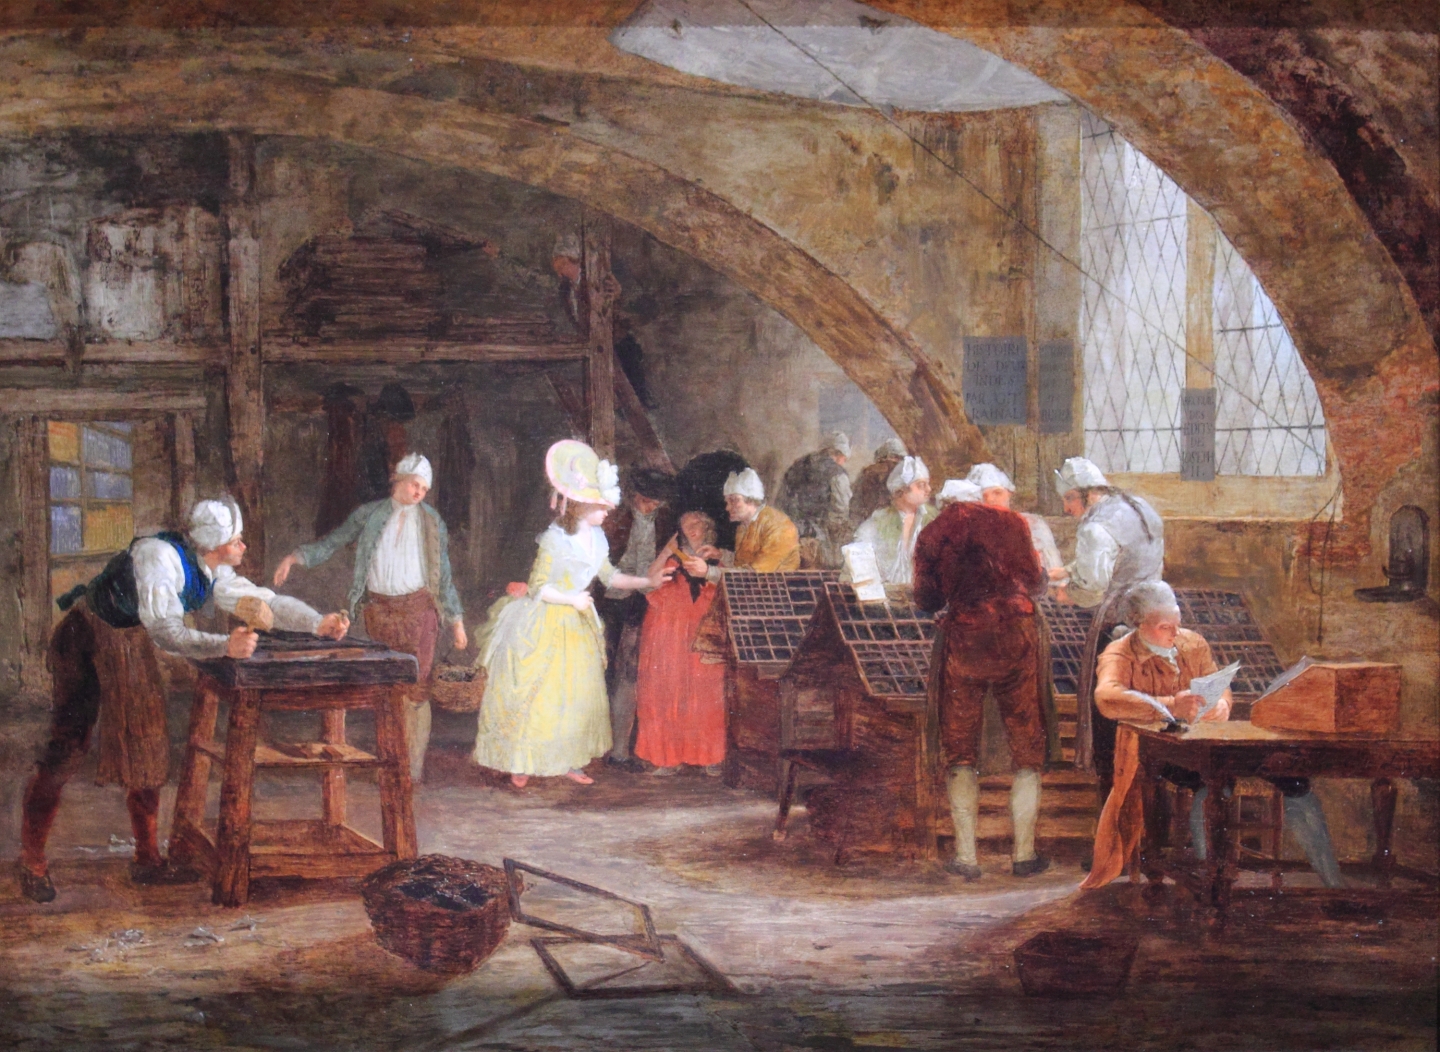 Léonard Defrance (Liège, 1735 - 1805) Studies for a visit to the printing office of Clément Plomteux, Liège